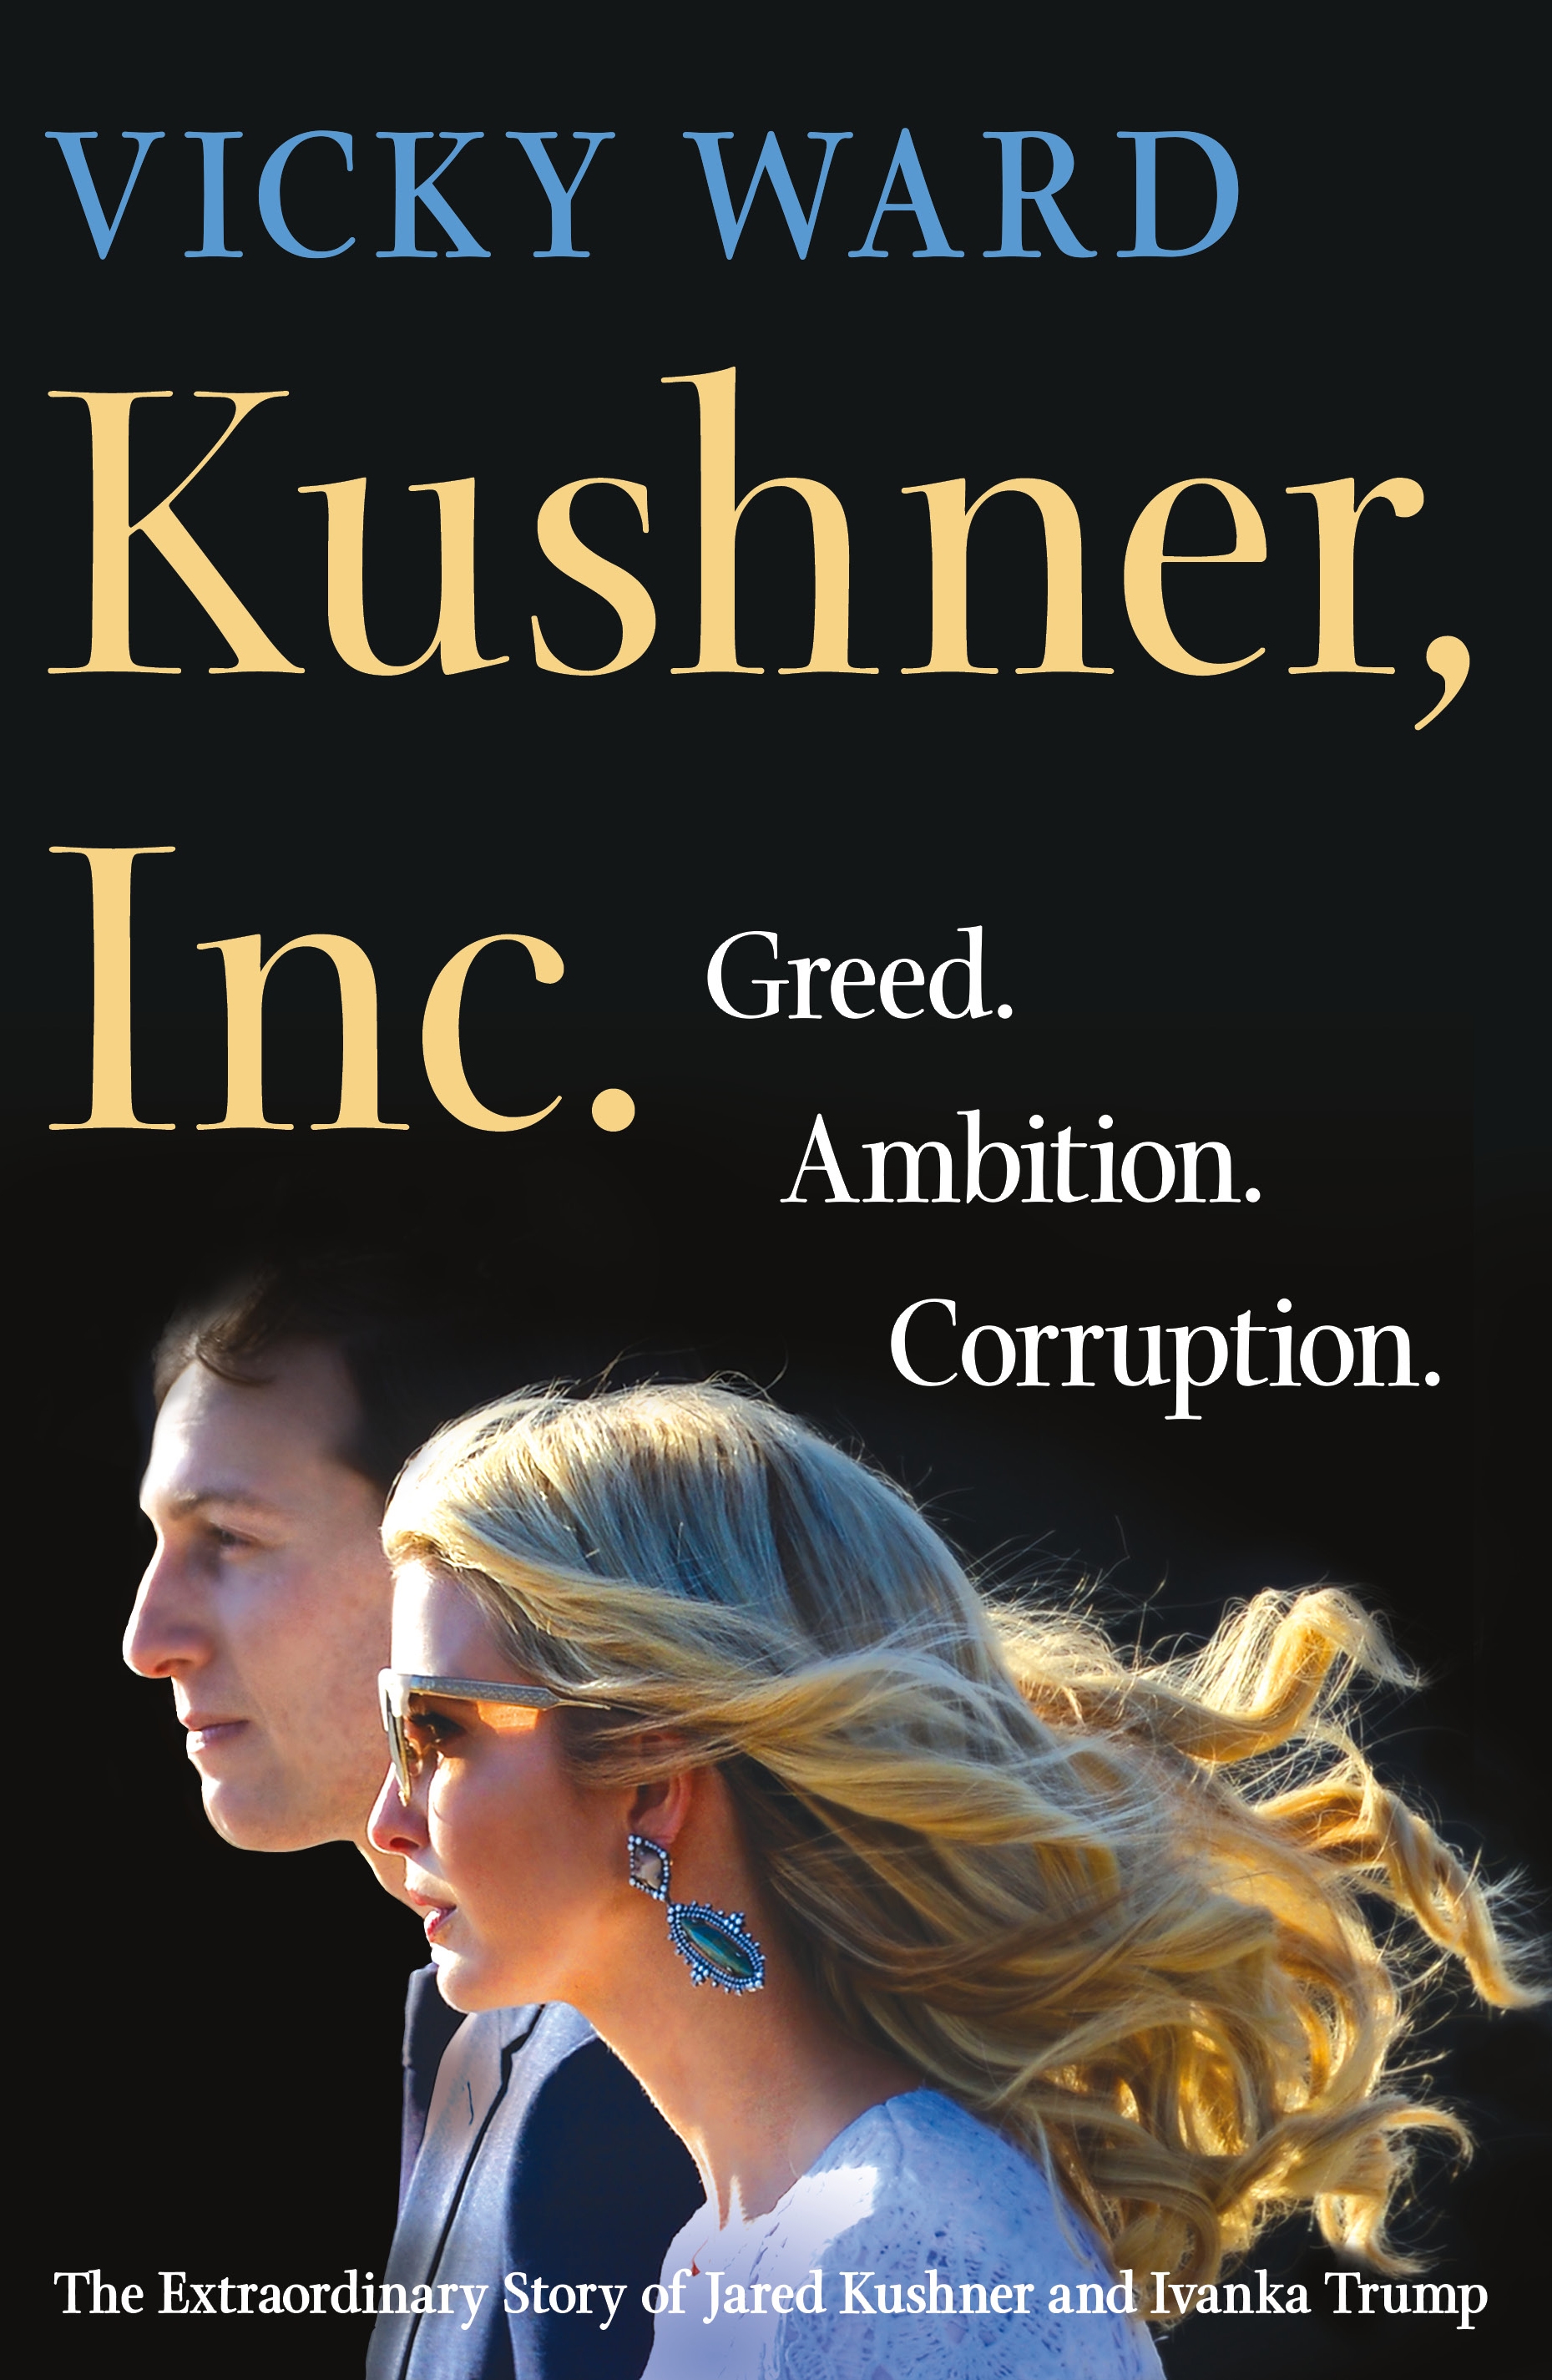 Kushner, Inc.: Greed. Ambition. Corruption. The Extraordinary Story of Jared Kushner and Ivanka Trump By Vicky Ward